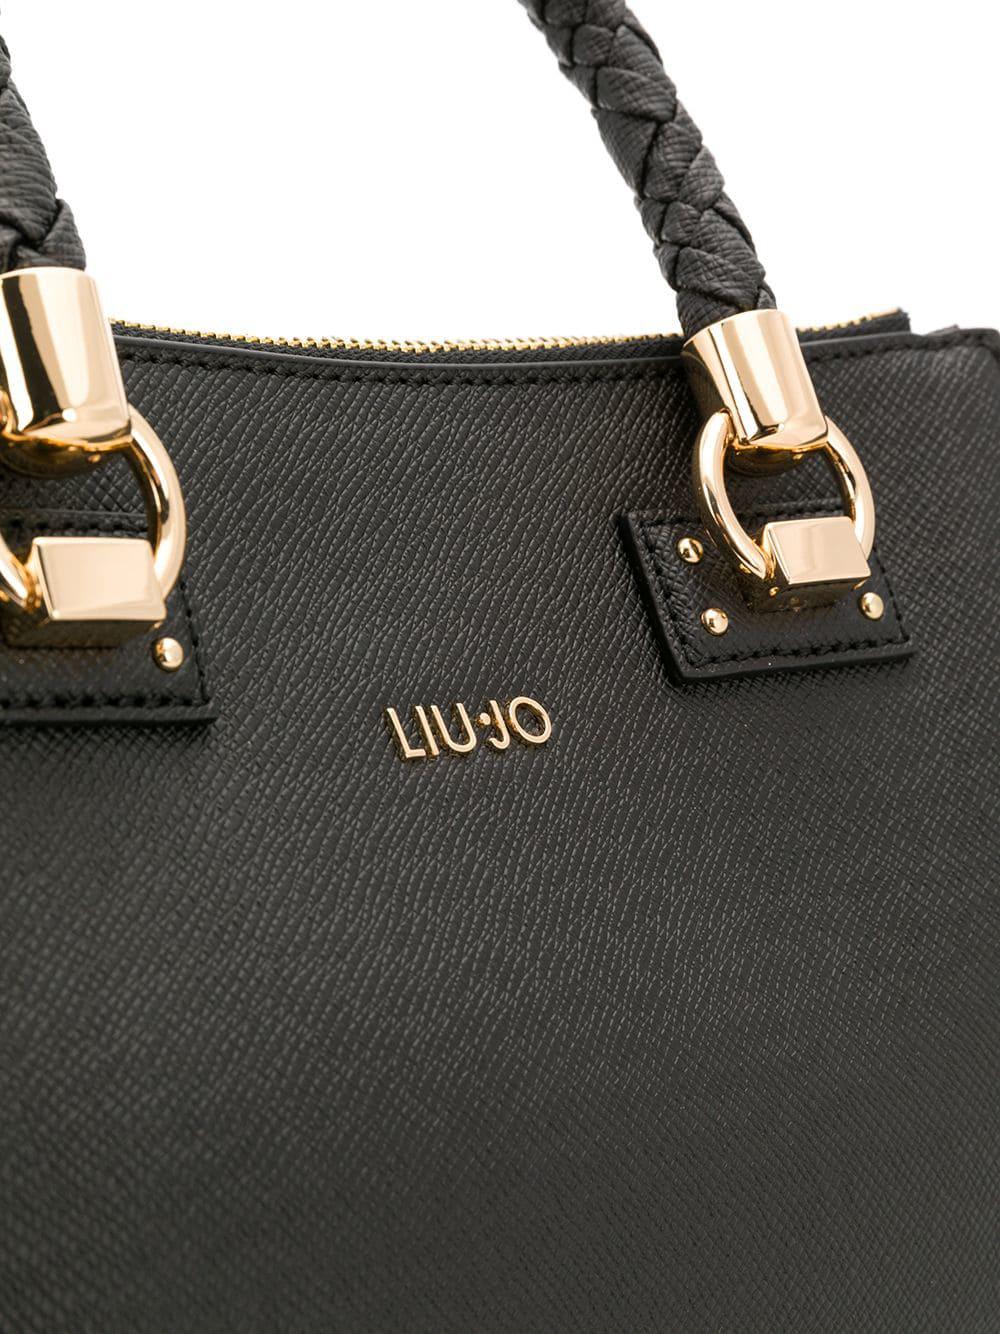 Liu Jo Synthetic Manhattan Small Bag in Black - Lyst